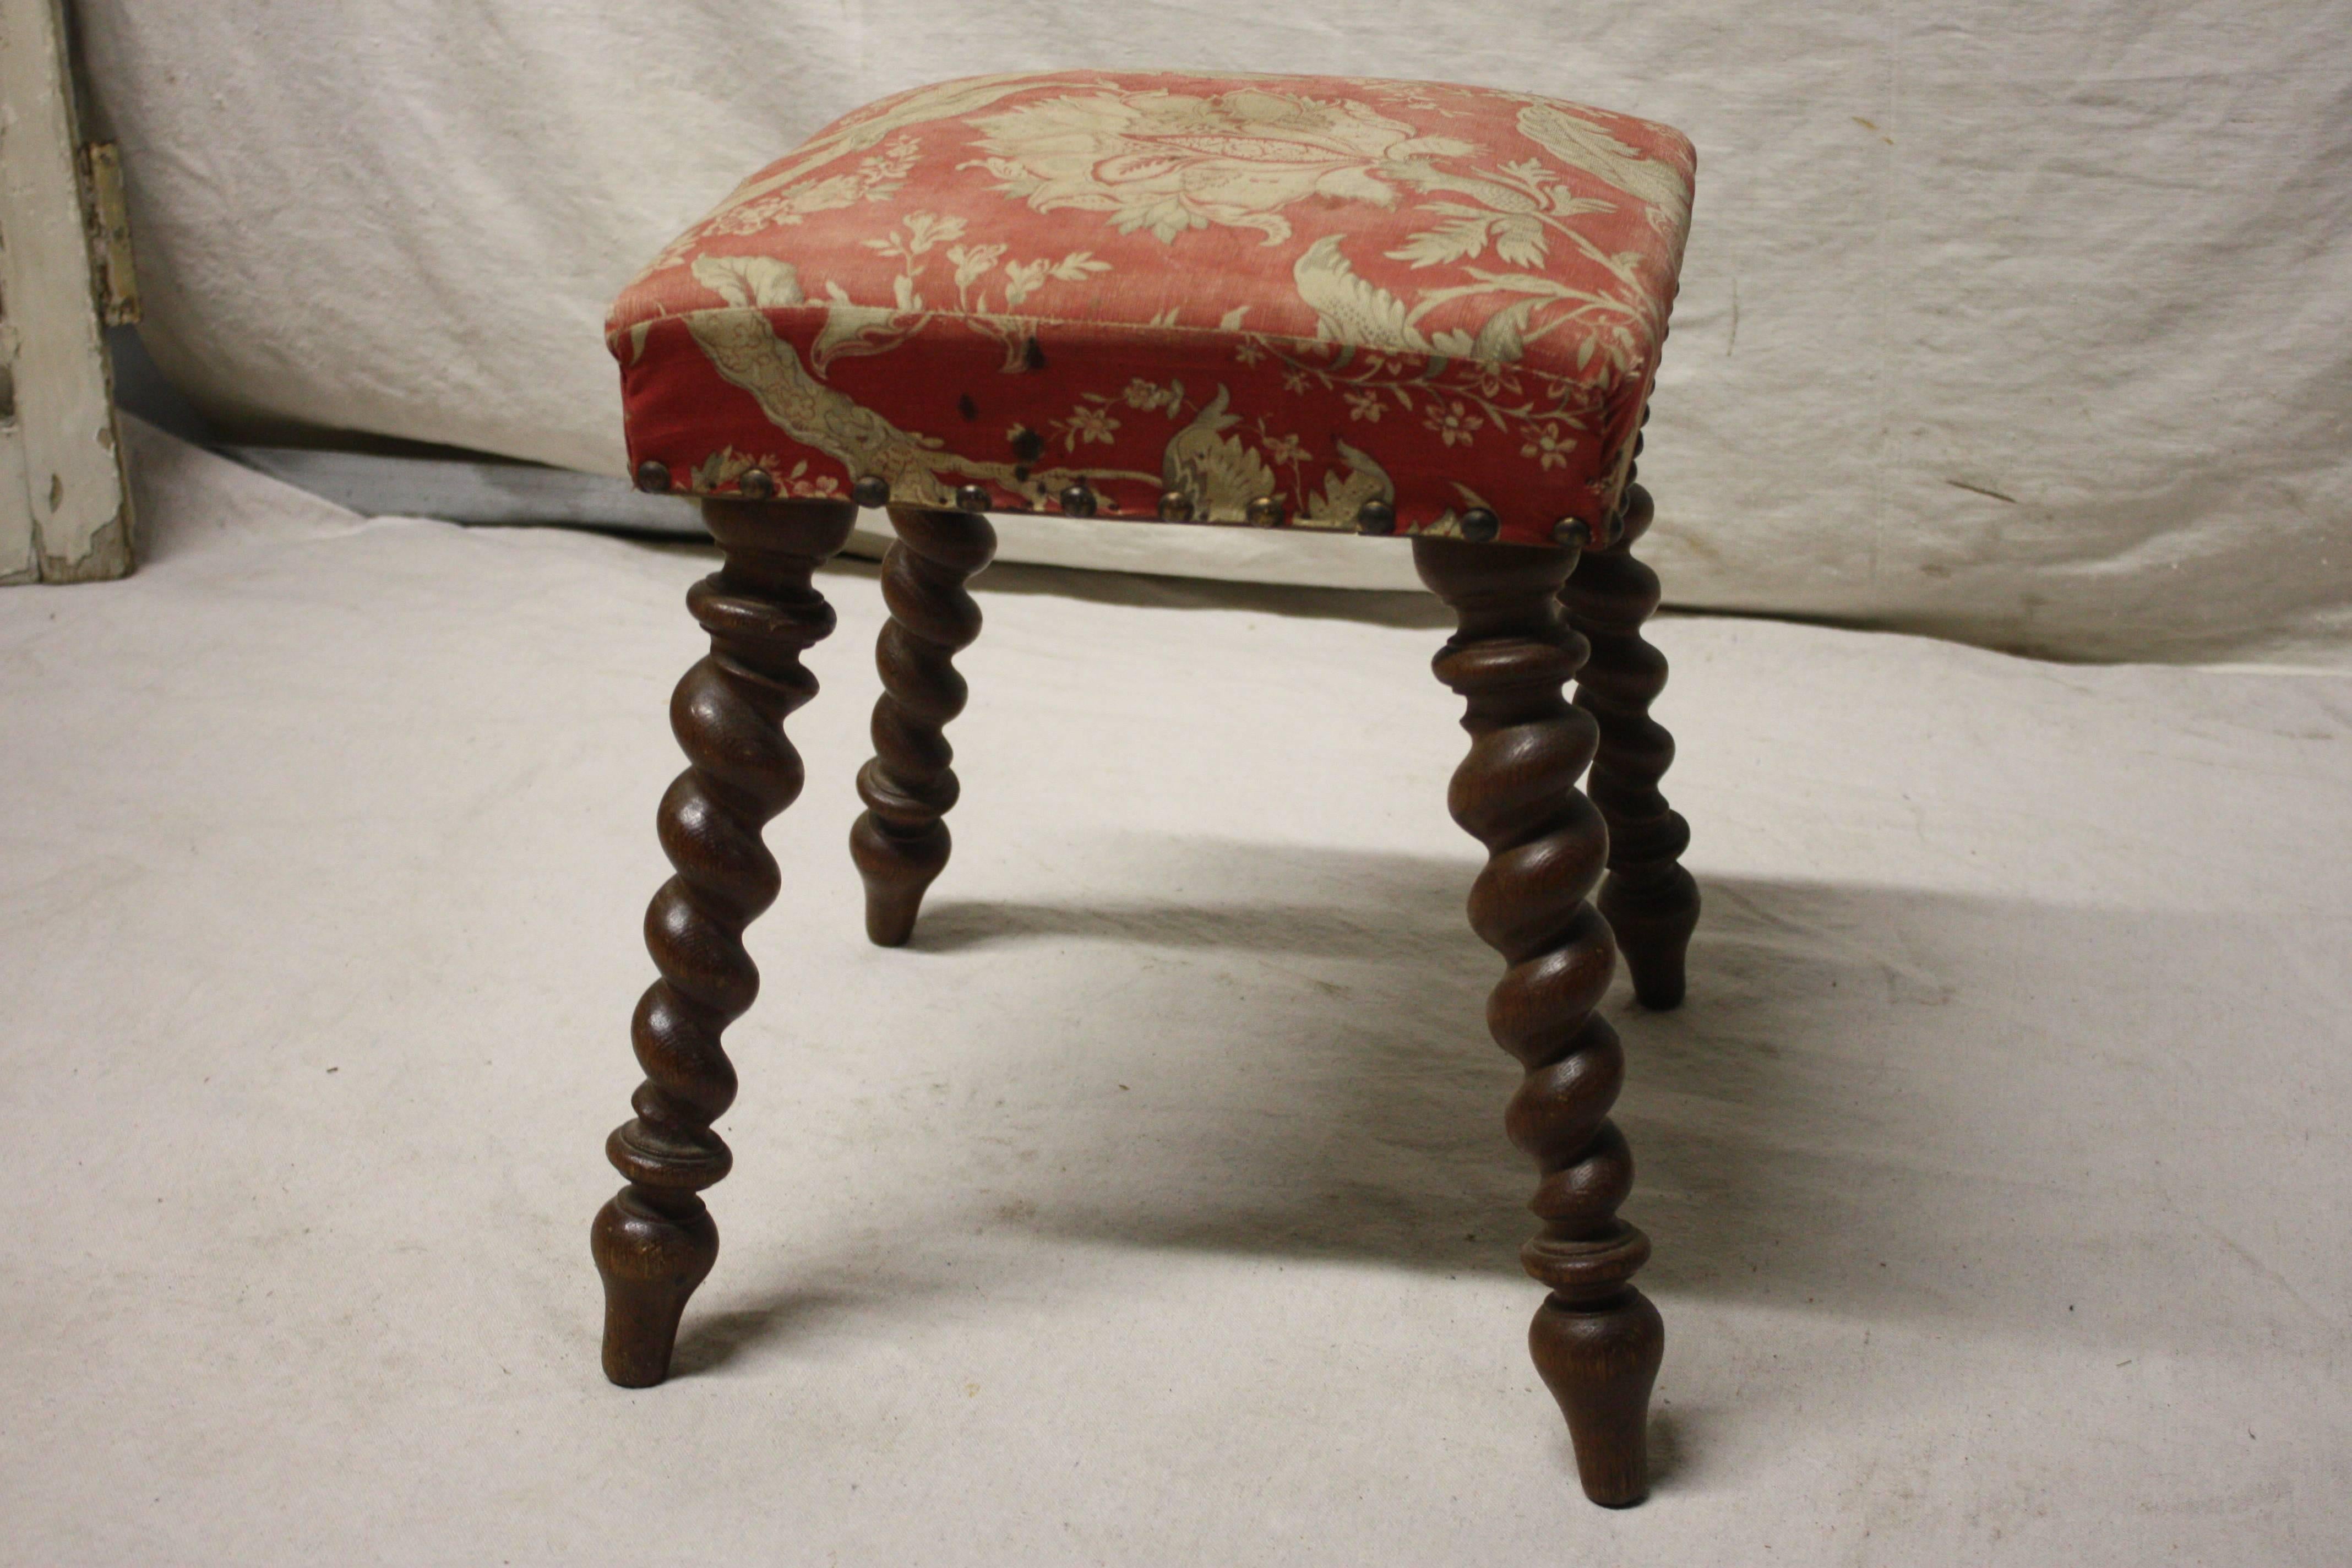 19th century stool, Maison Jeanselme, France.